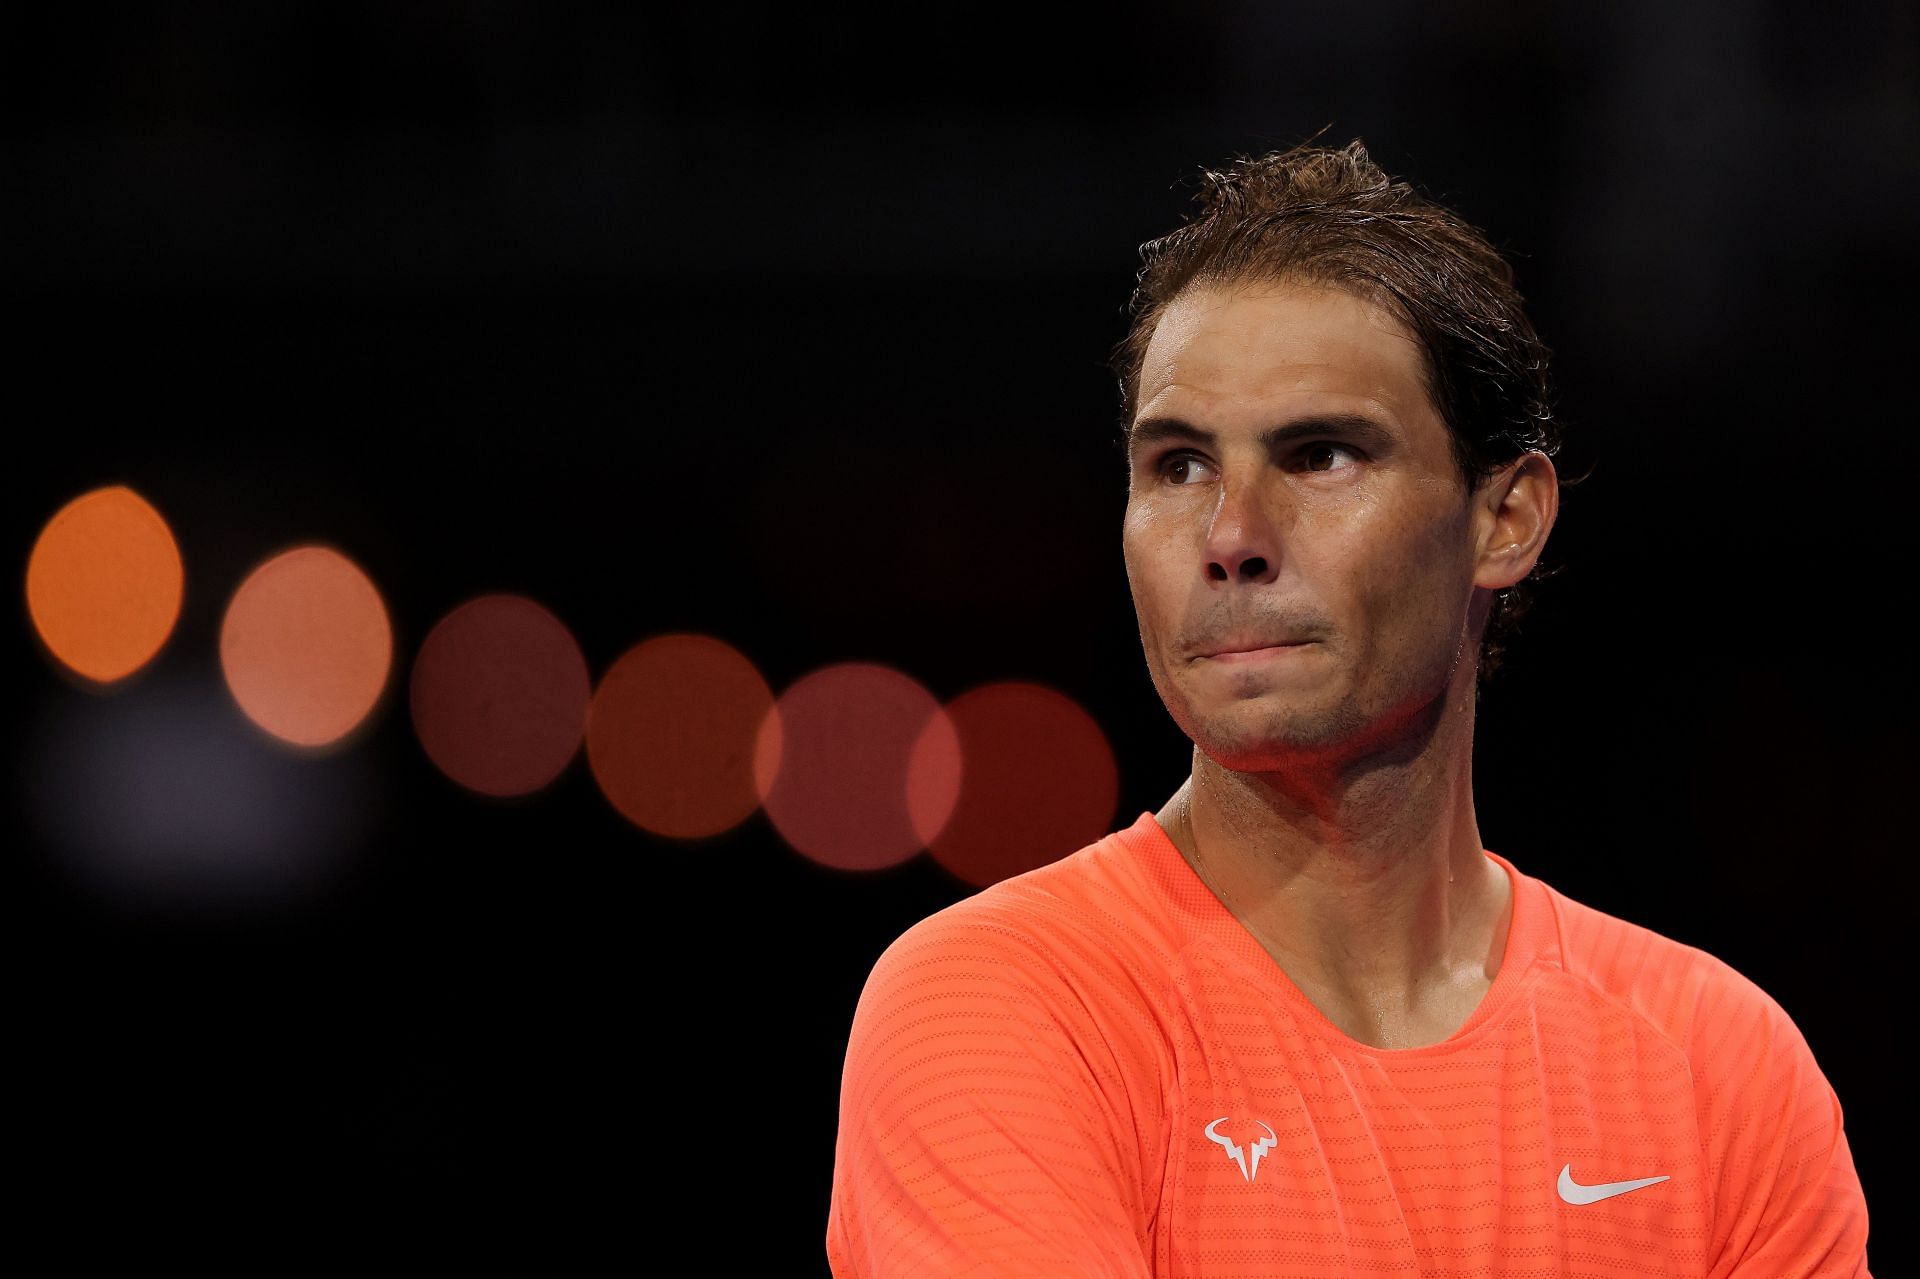 Rafael Nadal will return for the 2021 edition of the Mubadala World Tennis Championship.